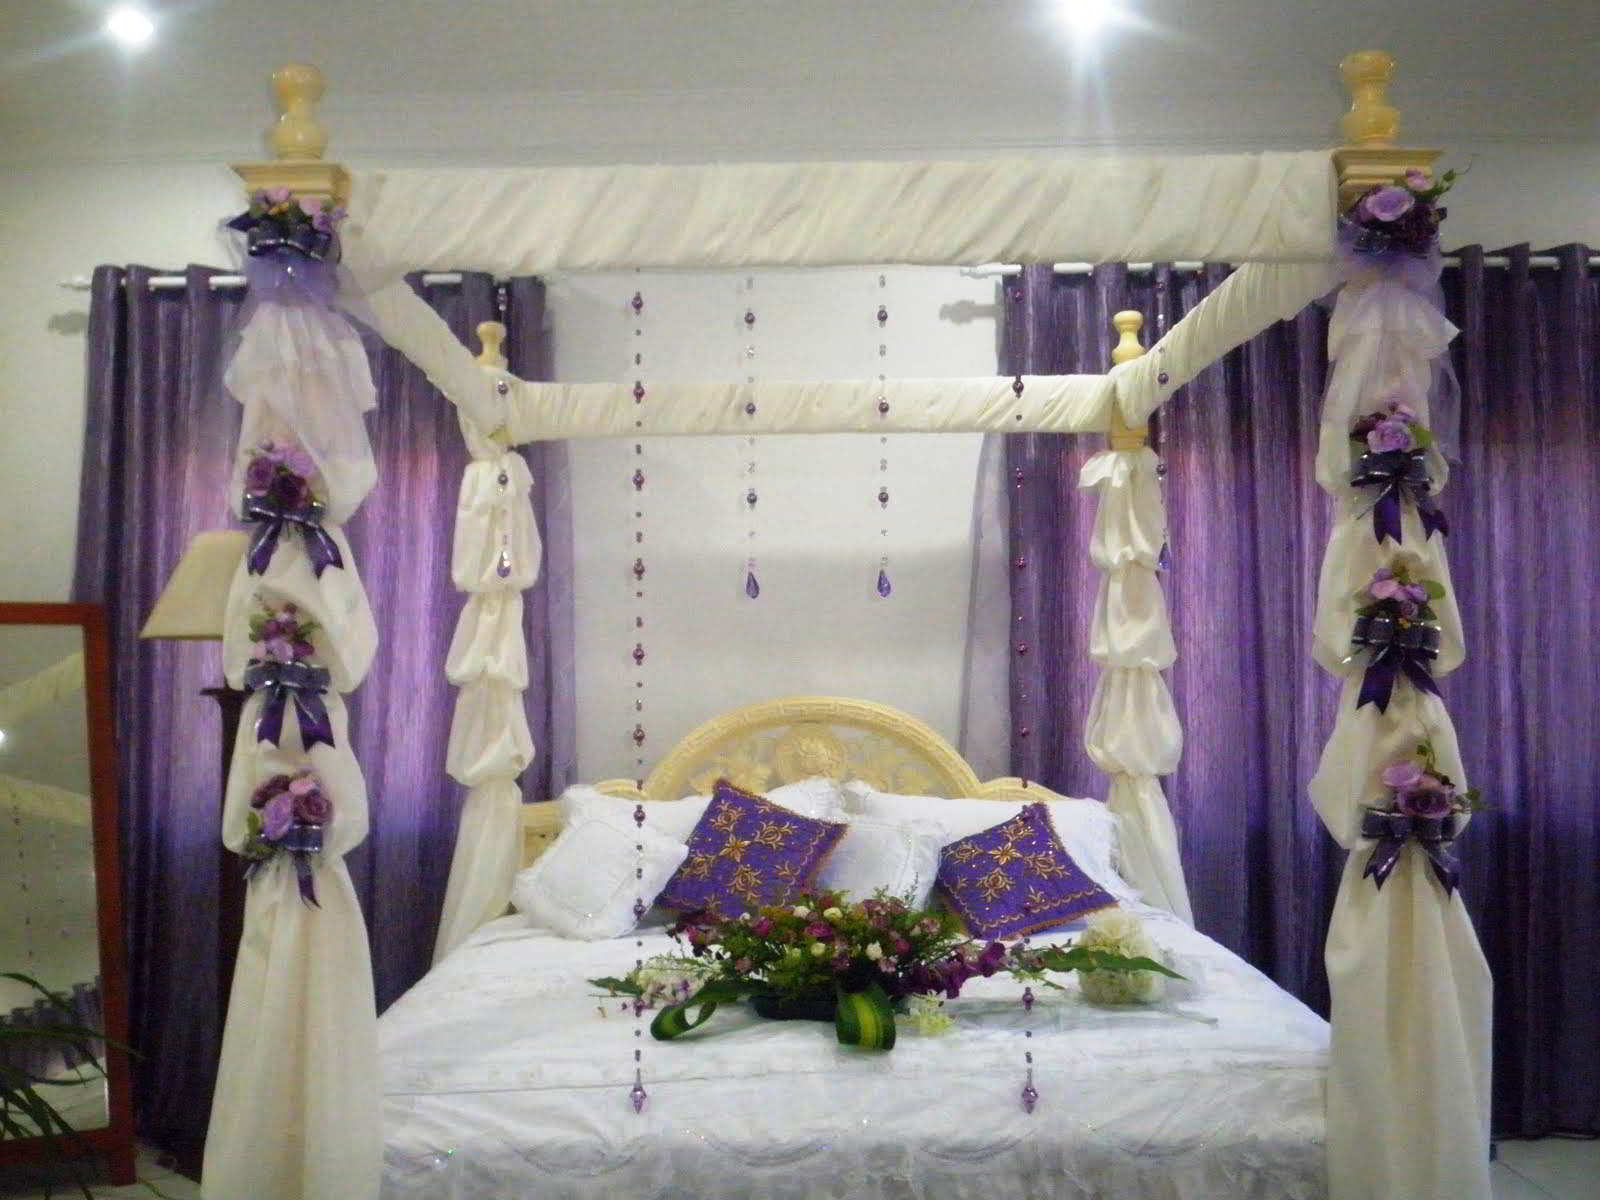 45 Dekorasi Interior Kamar Tidur Pengantin Romantis Sempit